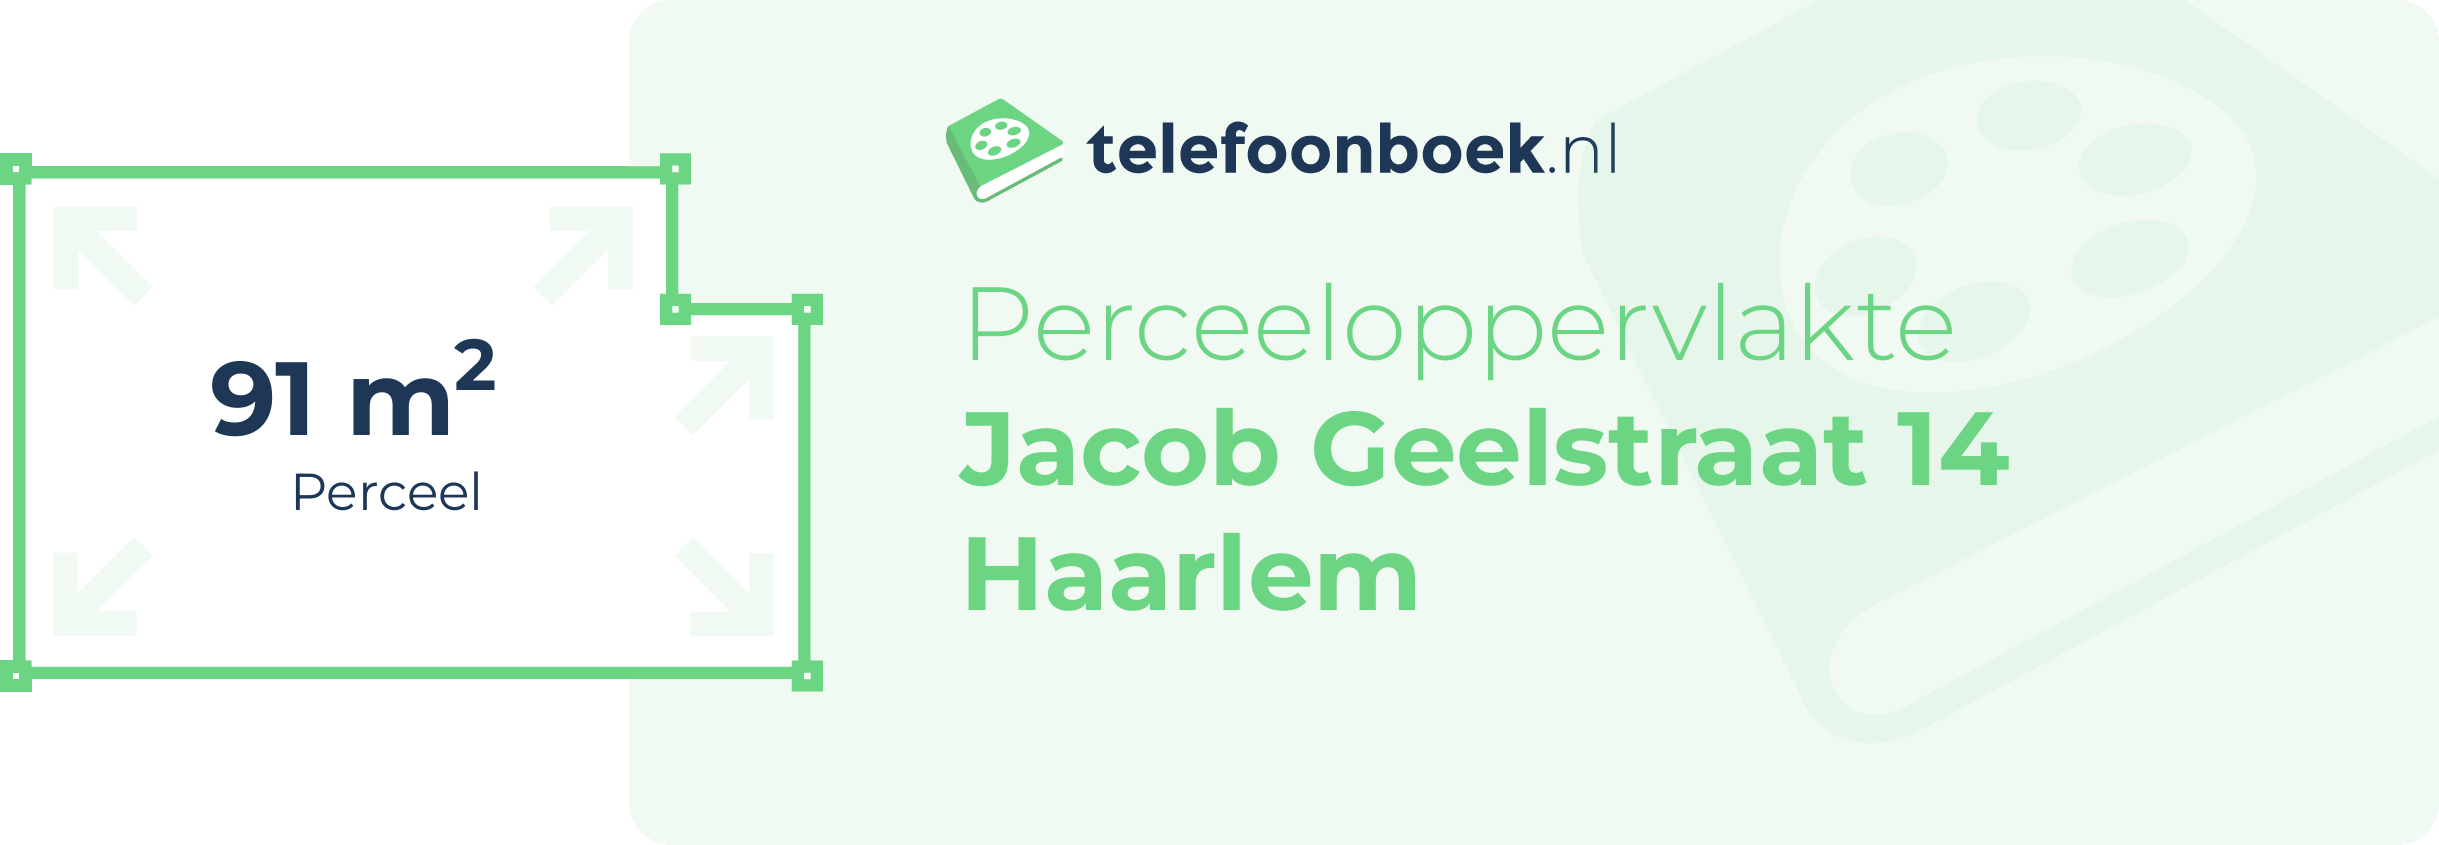 Perceeloppervlakte Jacob Geelstraat 14 Haarlem